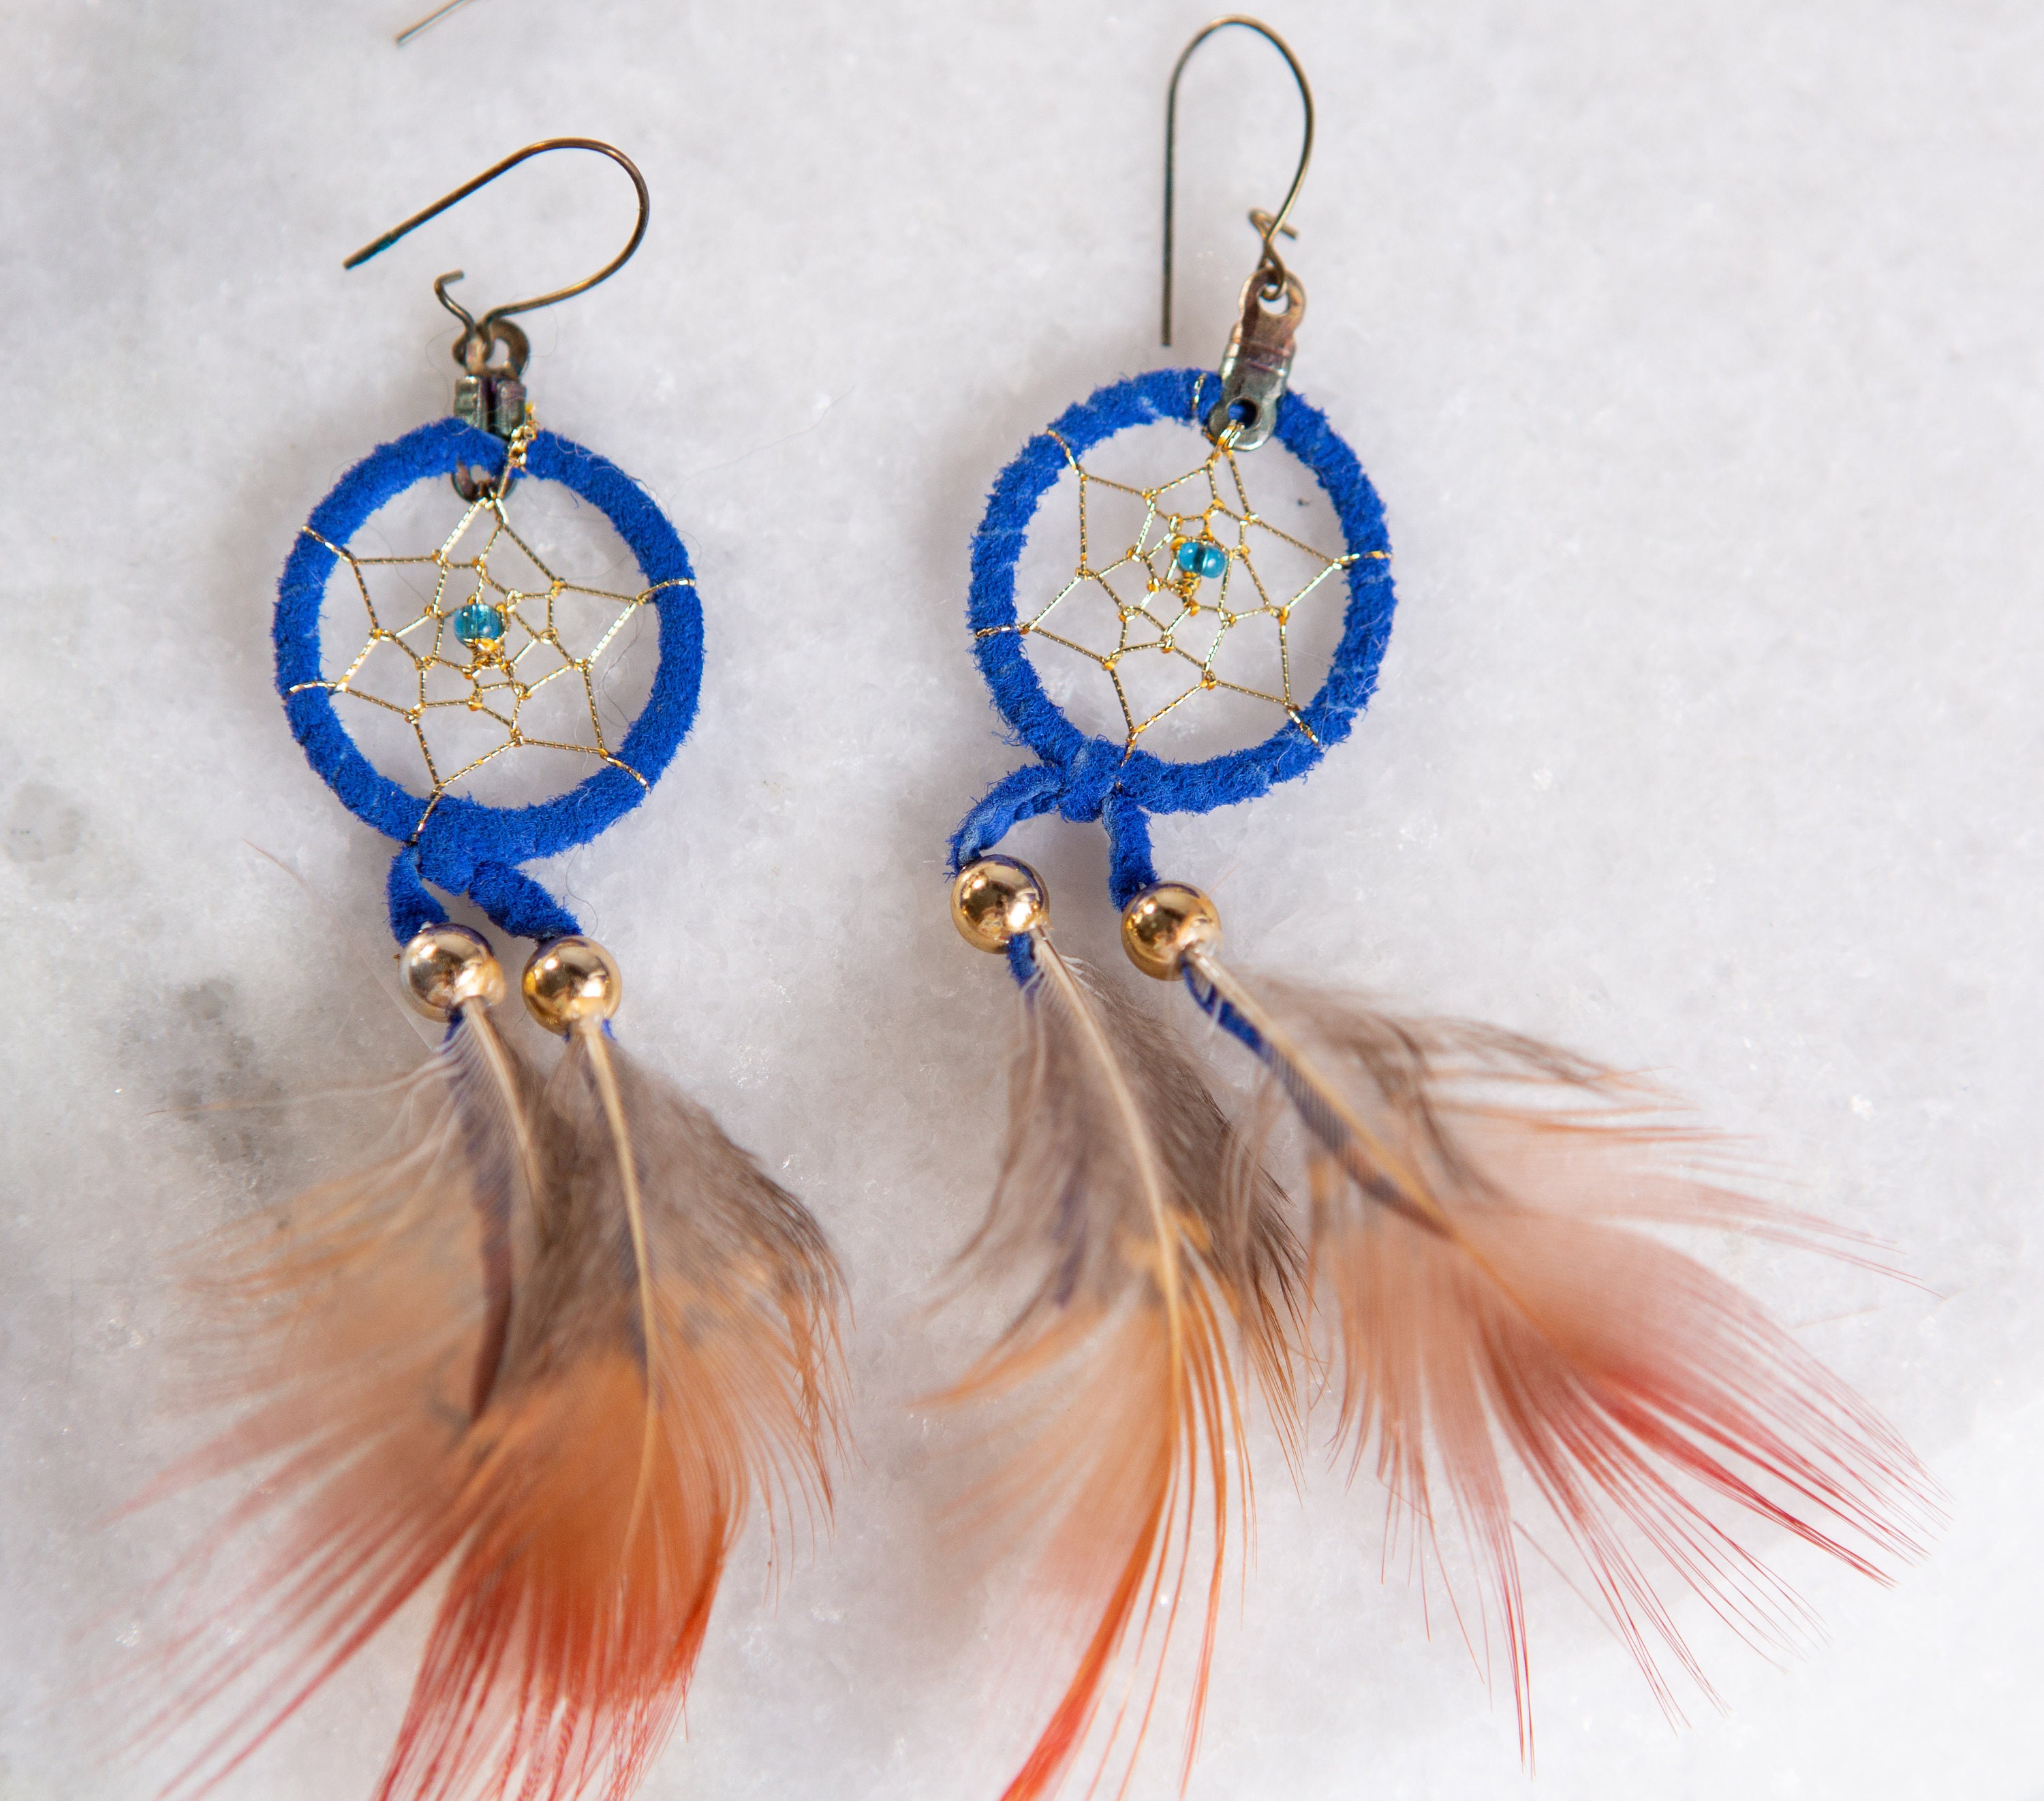 American Indian Inspired Jewelry Dangling Earrings Rainbow Jewelry Hippie Jewelry Feather Earrings Rainbow Dreamcatcher Earrings